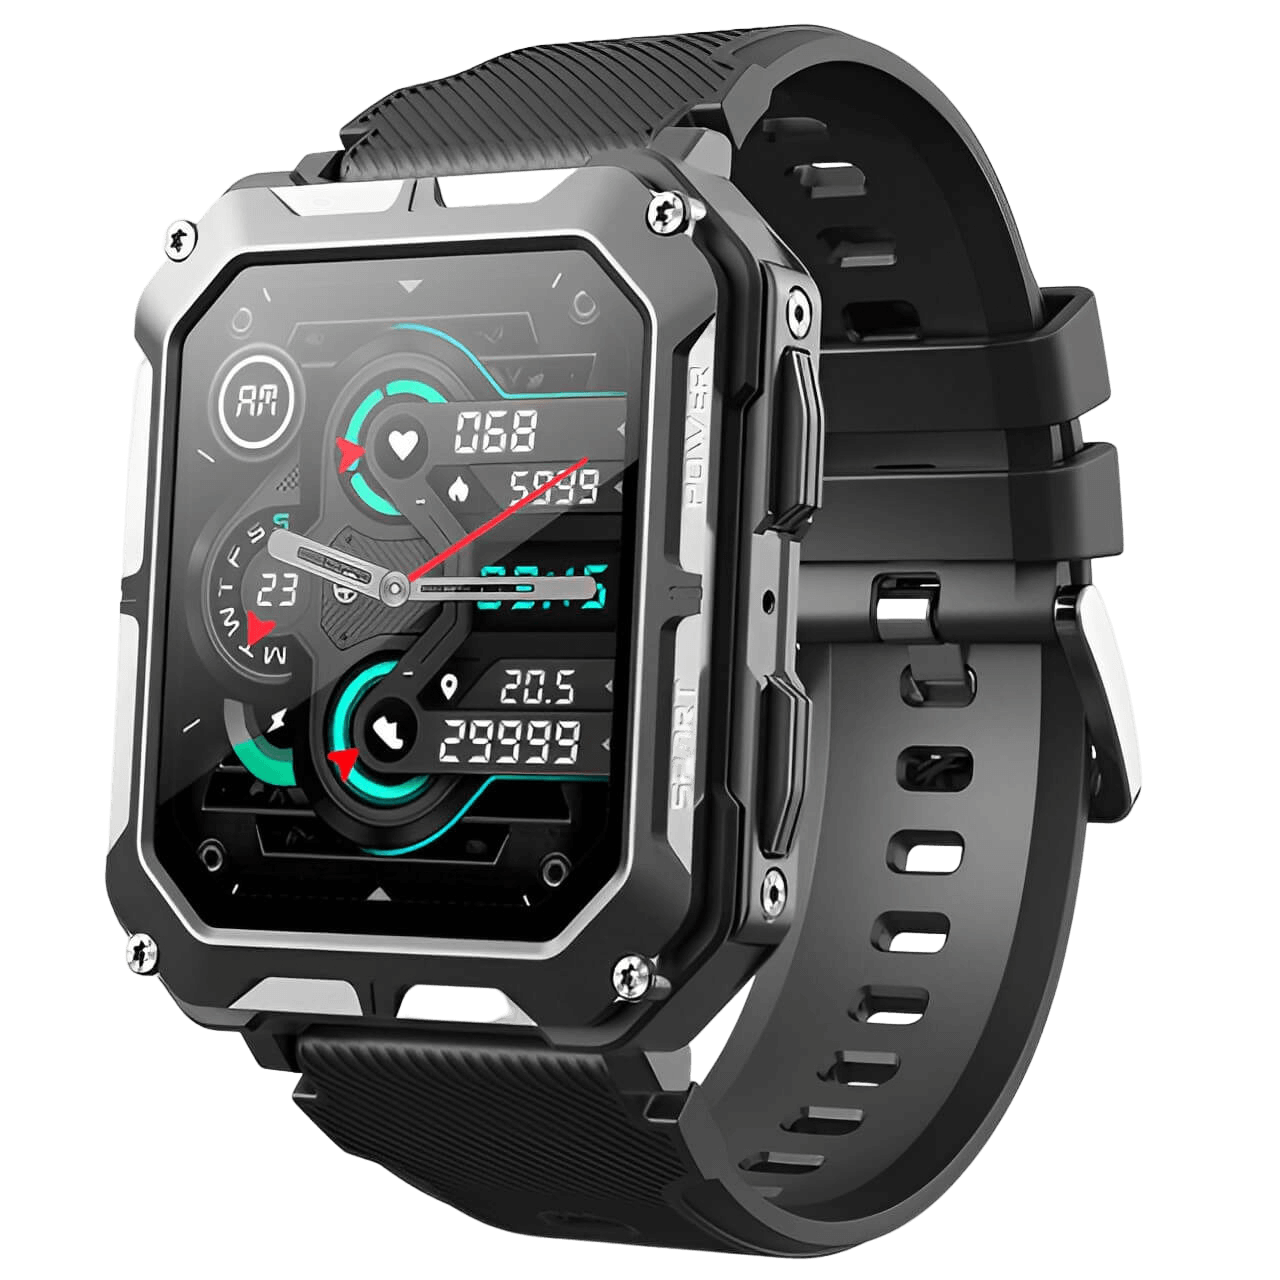 The Best Indestructible Smartwatch